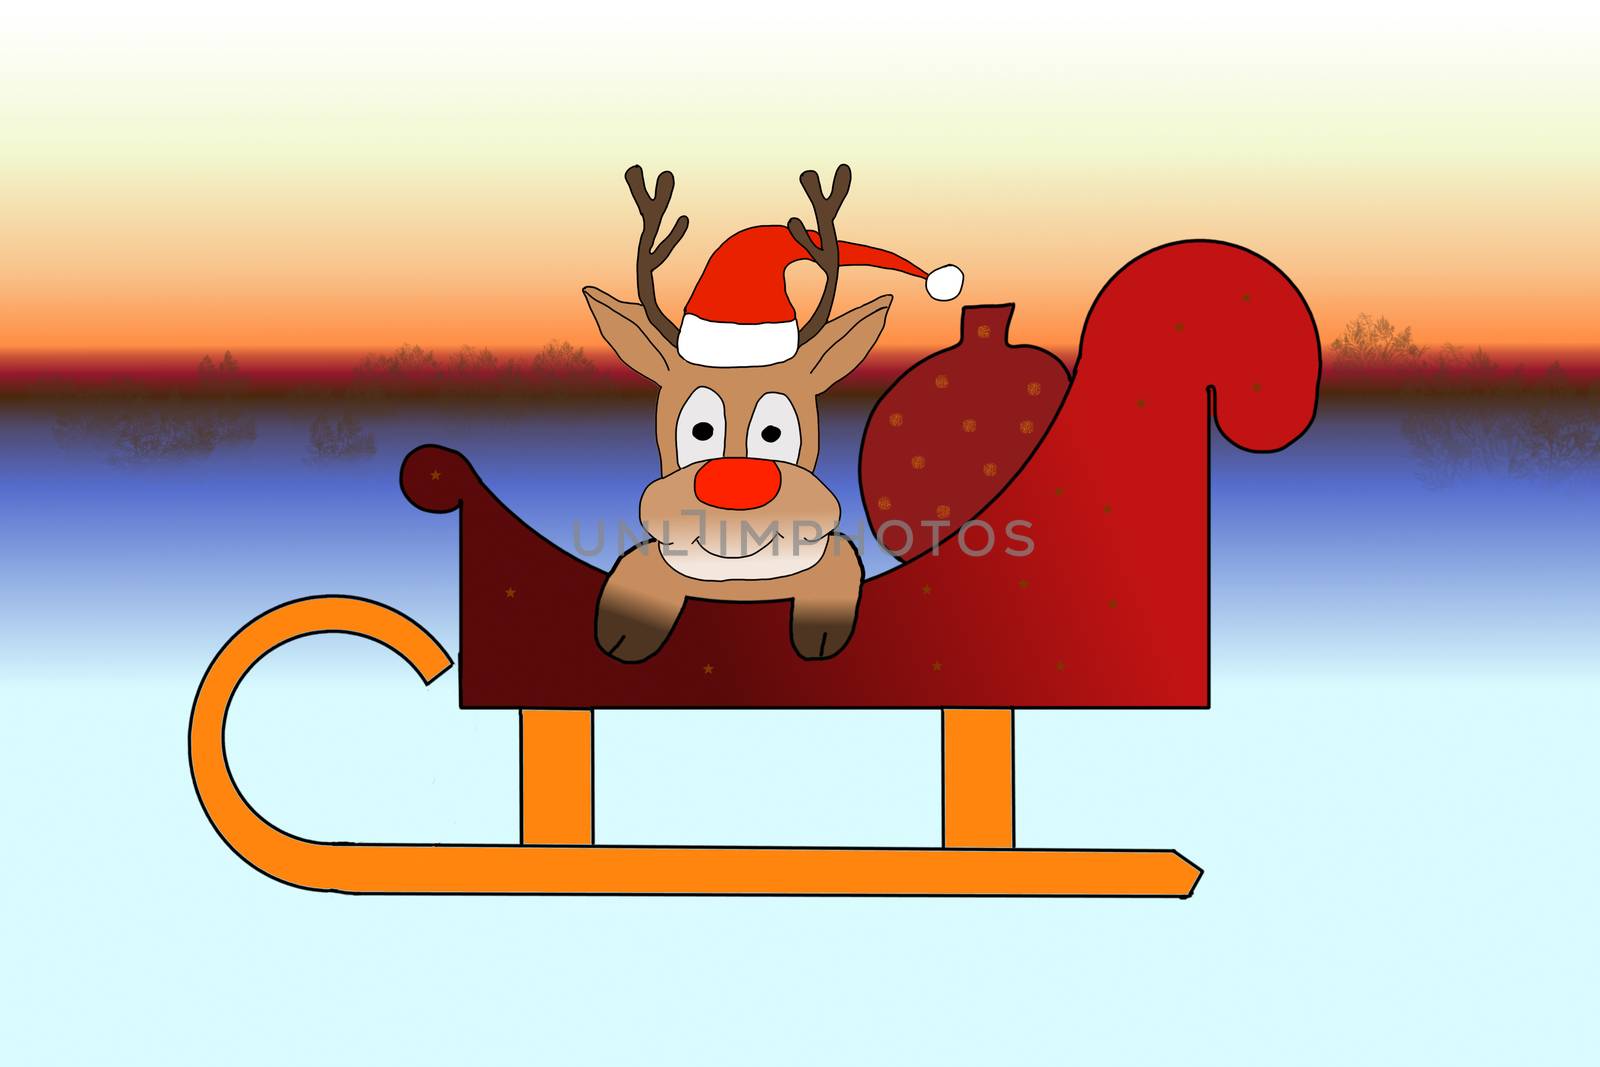 Rudolph sitting in Santas sleigh